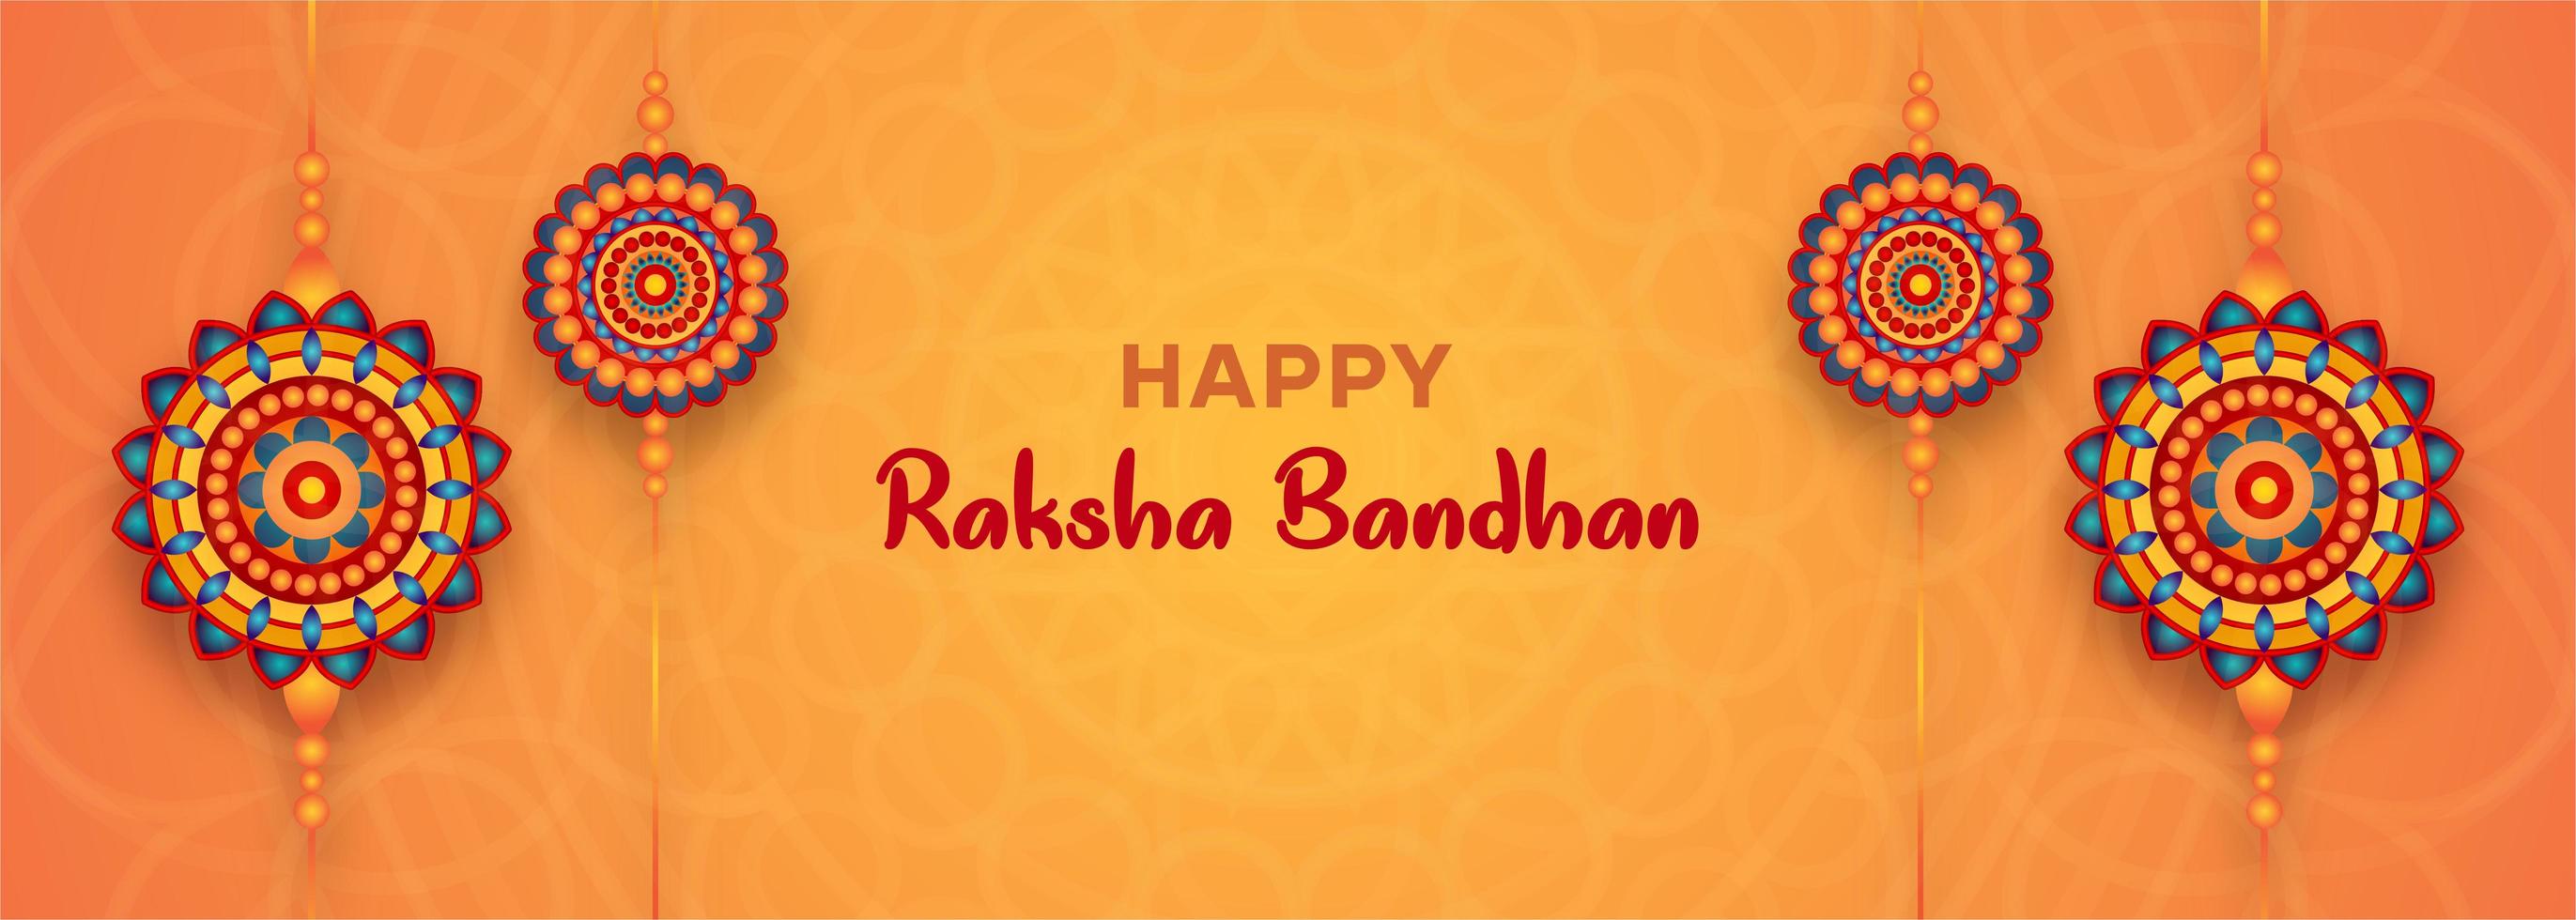 Banner raksha bandhan laranja com 4 mandalas coloridas vetor